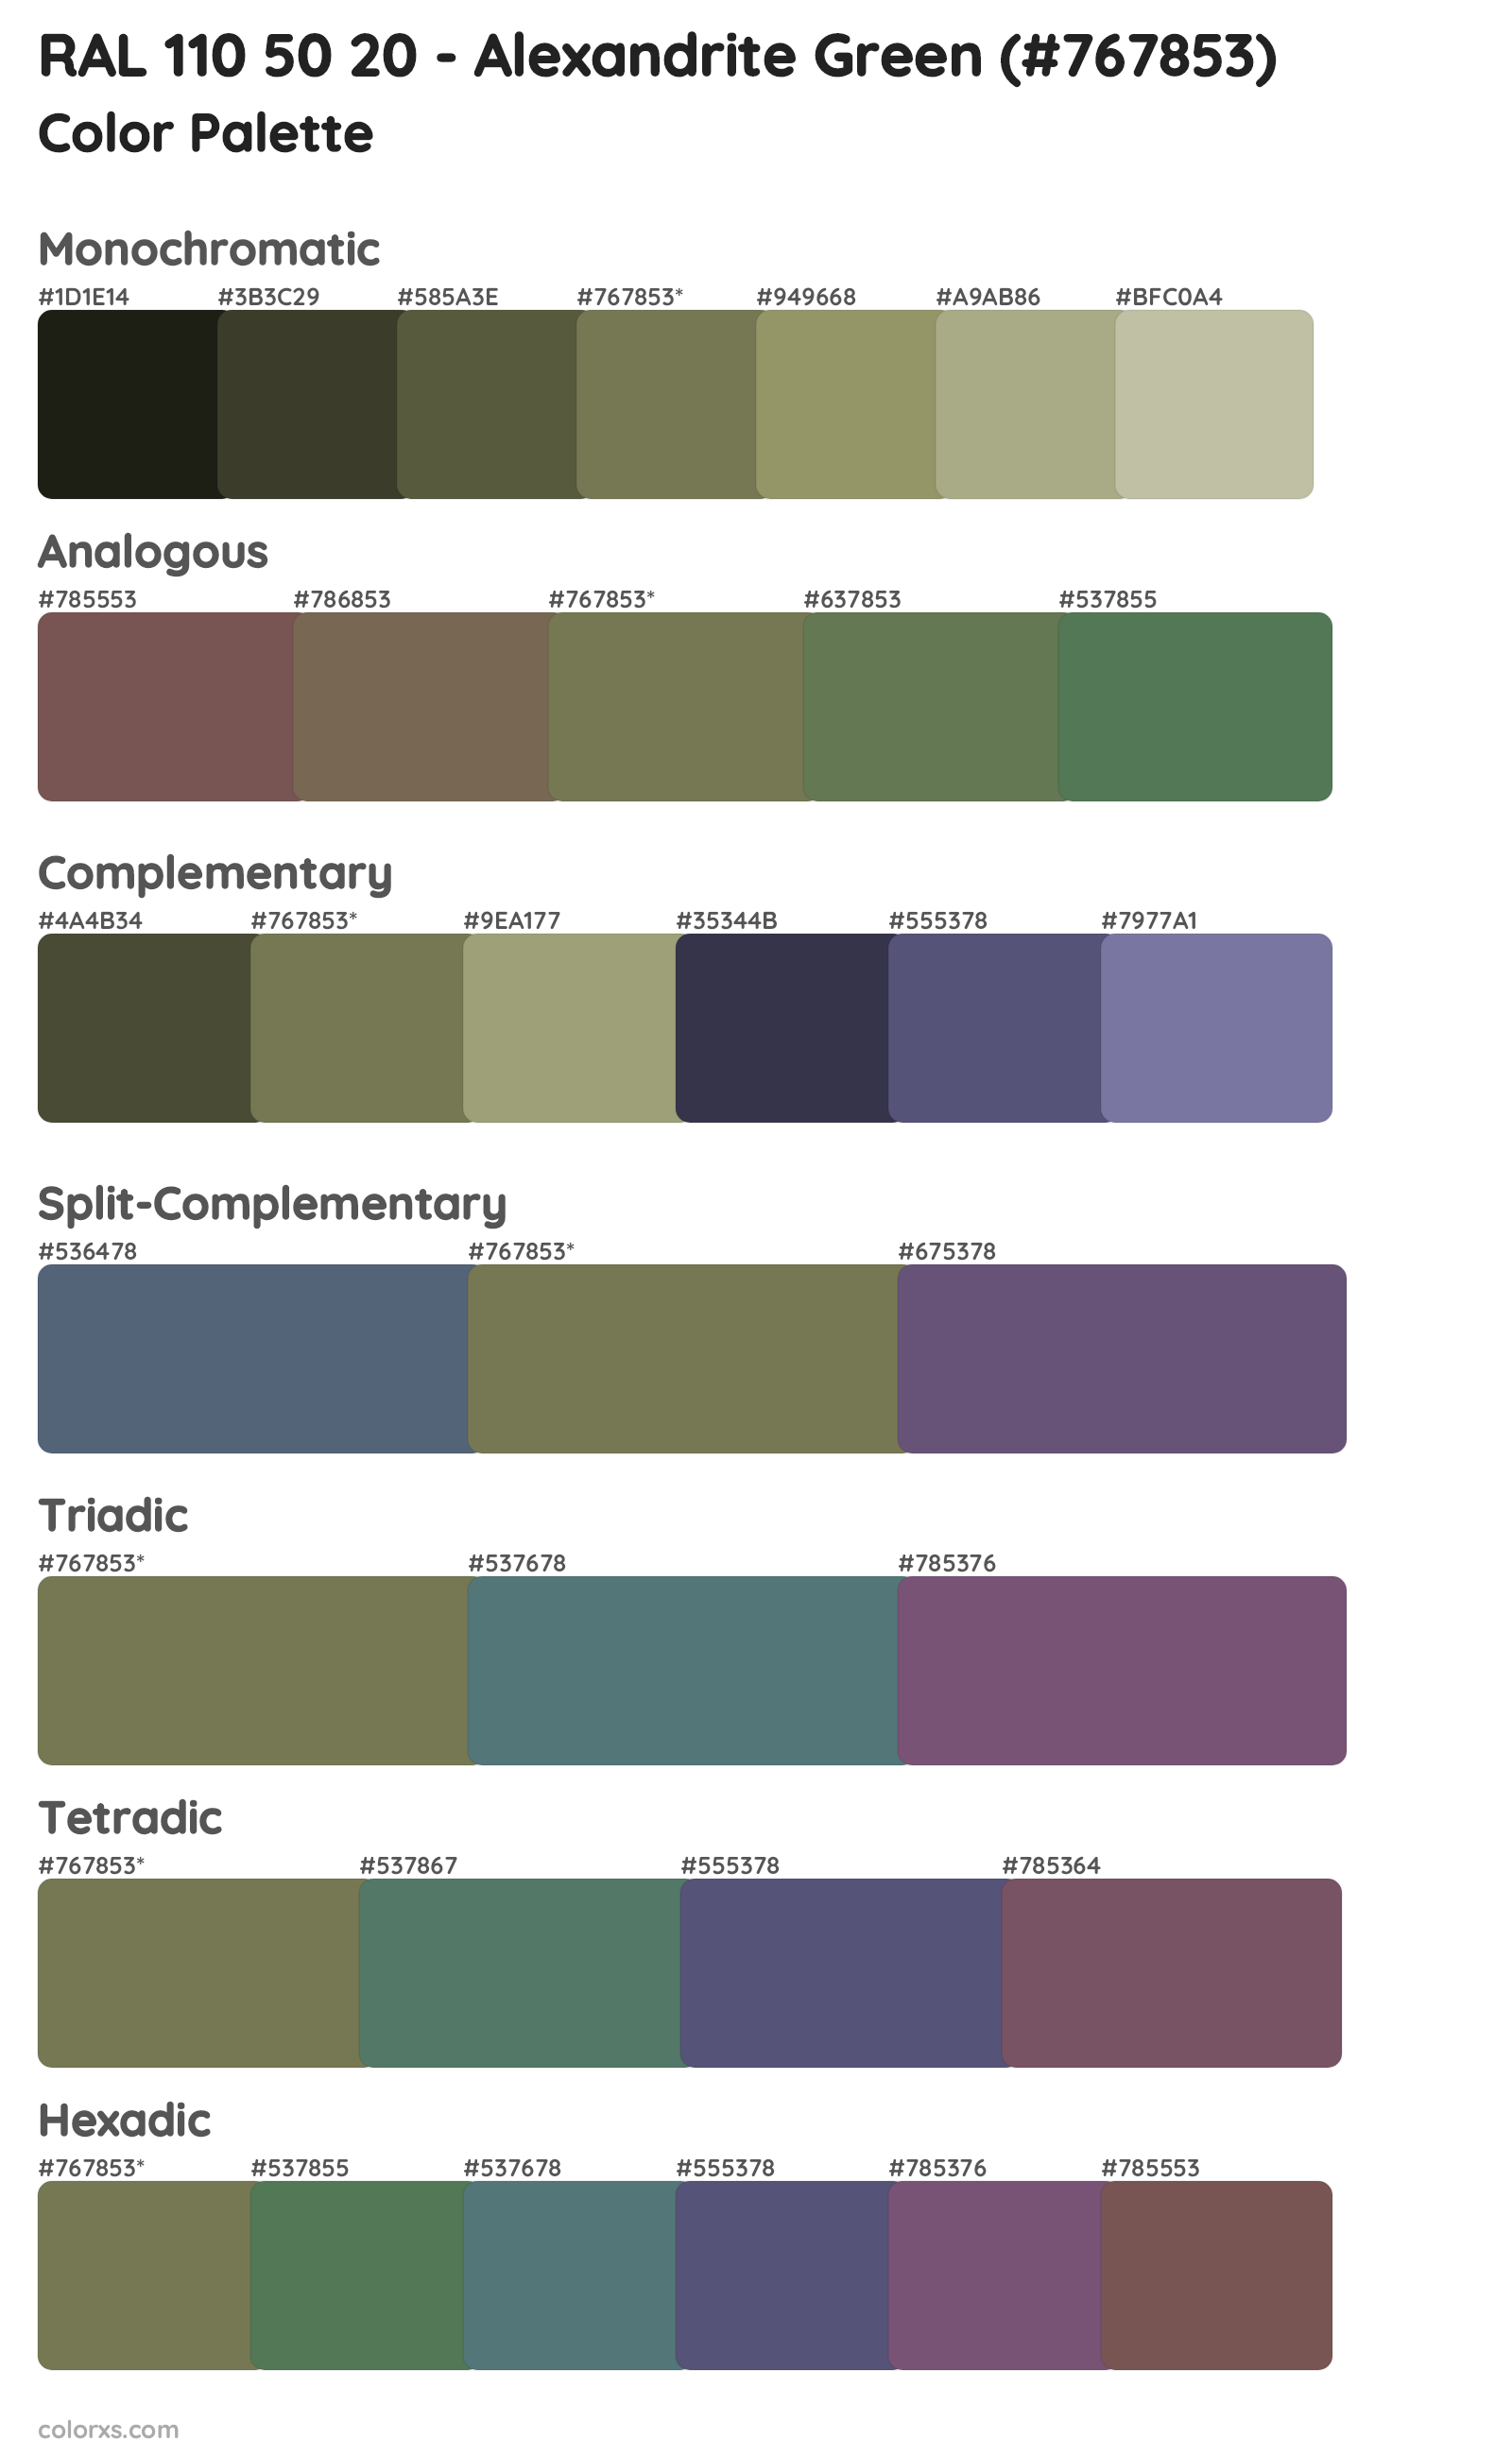 RAL 110 50 20 - Alexandrite Green Color Scheme Palettes